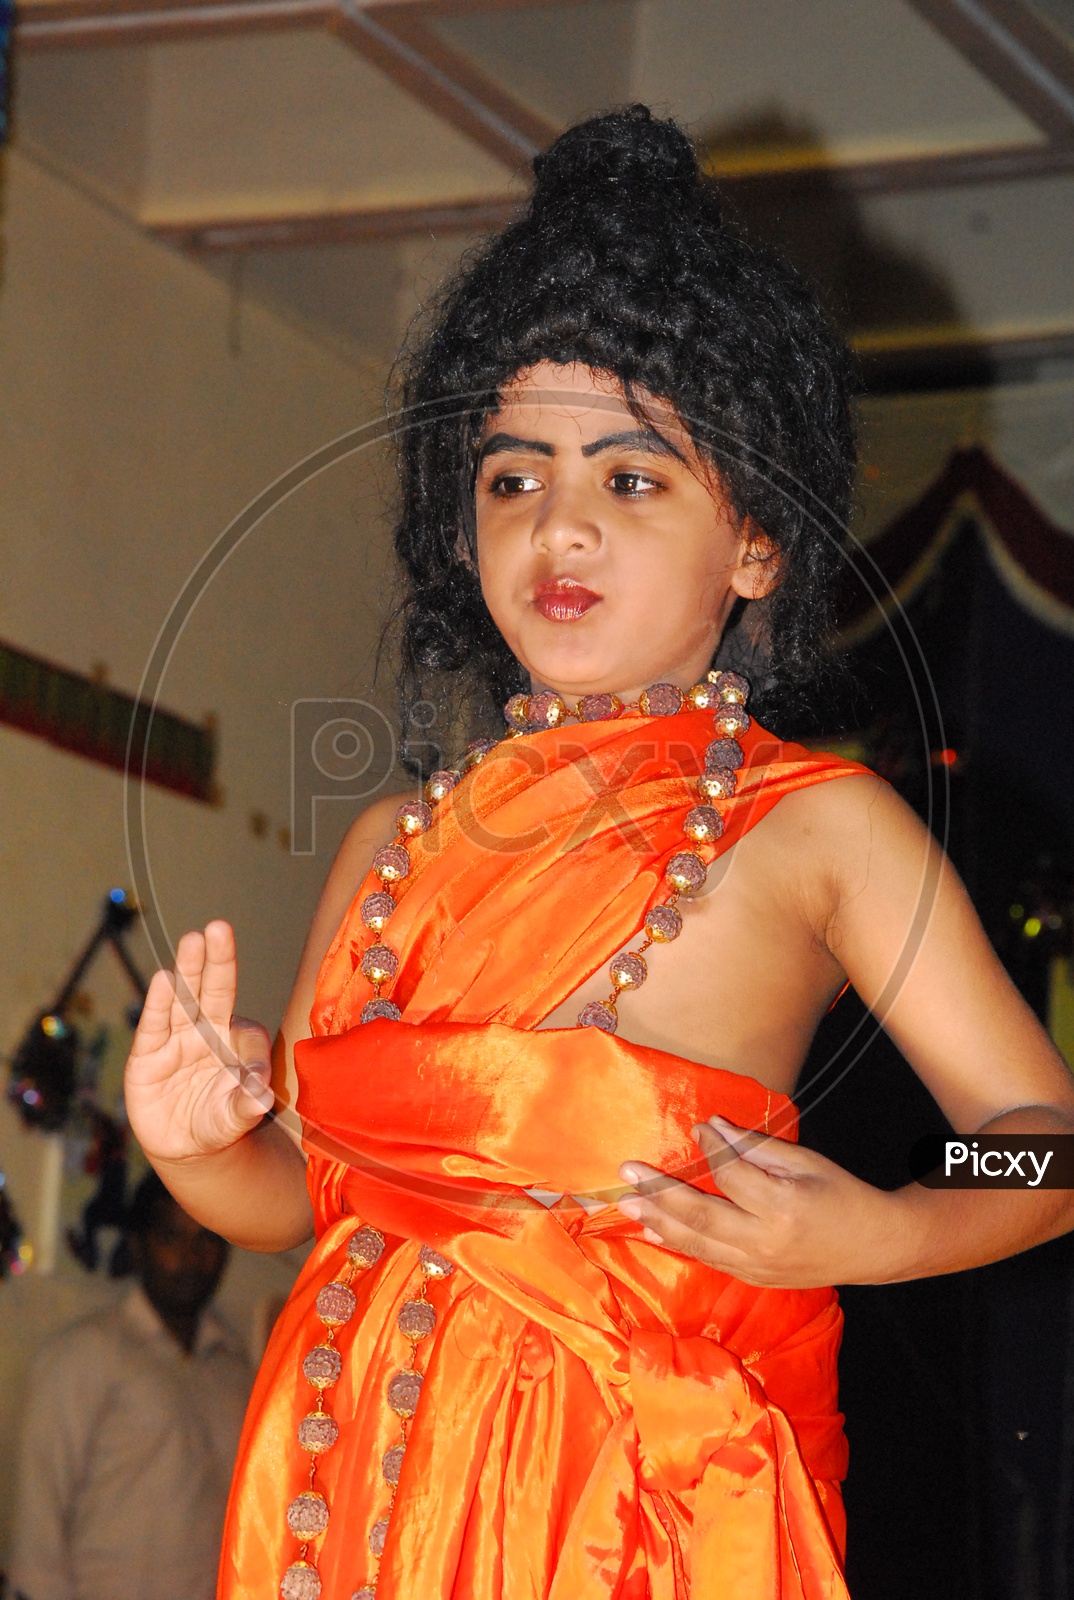 Buy Kaku Fancy Dresses Ram Costume for Boy/Ram Navami/Ram Dress/Dushera  Costume/Ramayan Play/Mythological Costume for Boys - Magenta, 7-8 Years  Online at Low Prices in India - Amazon.in